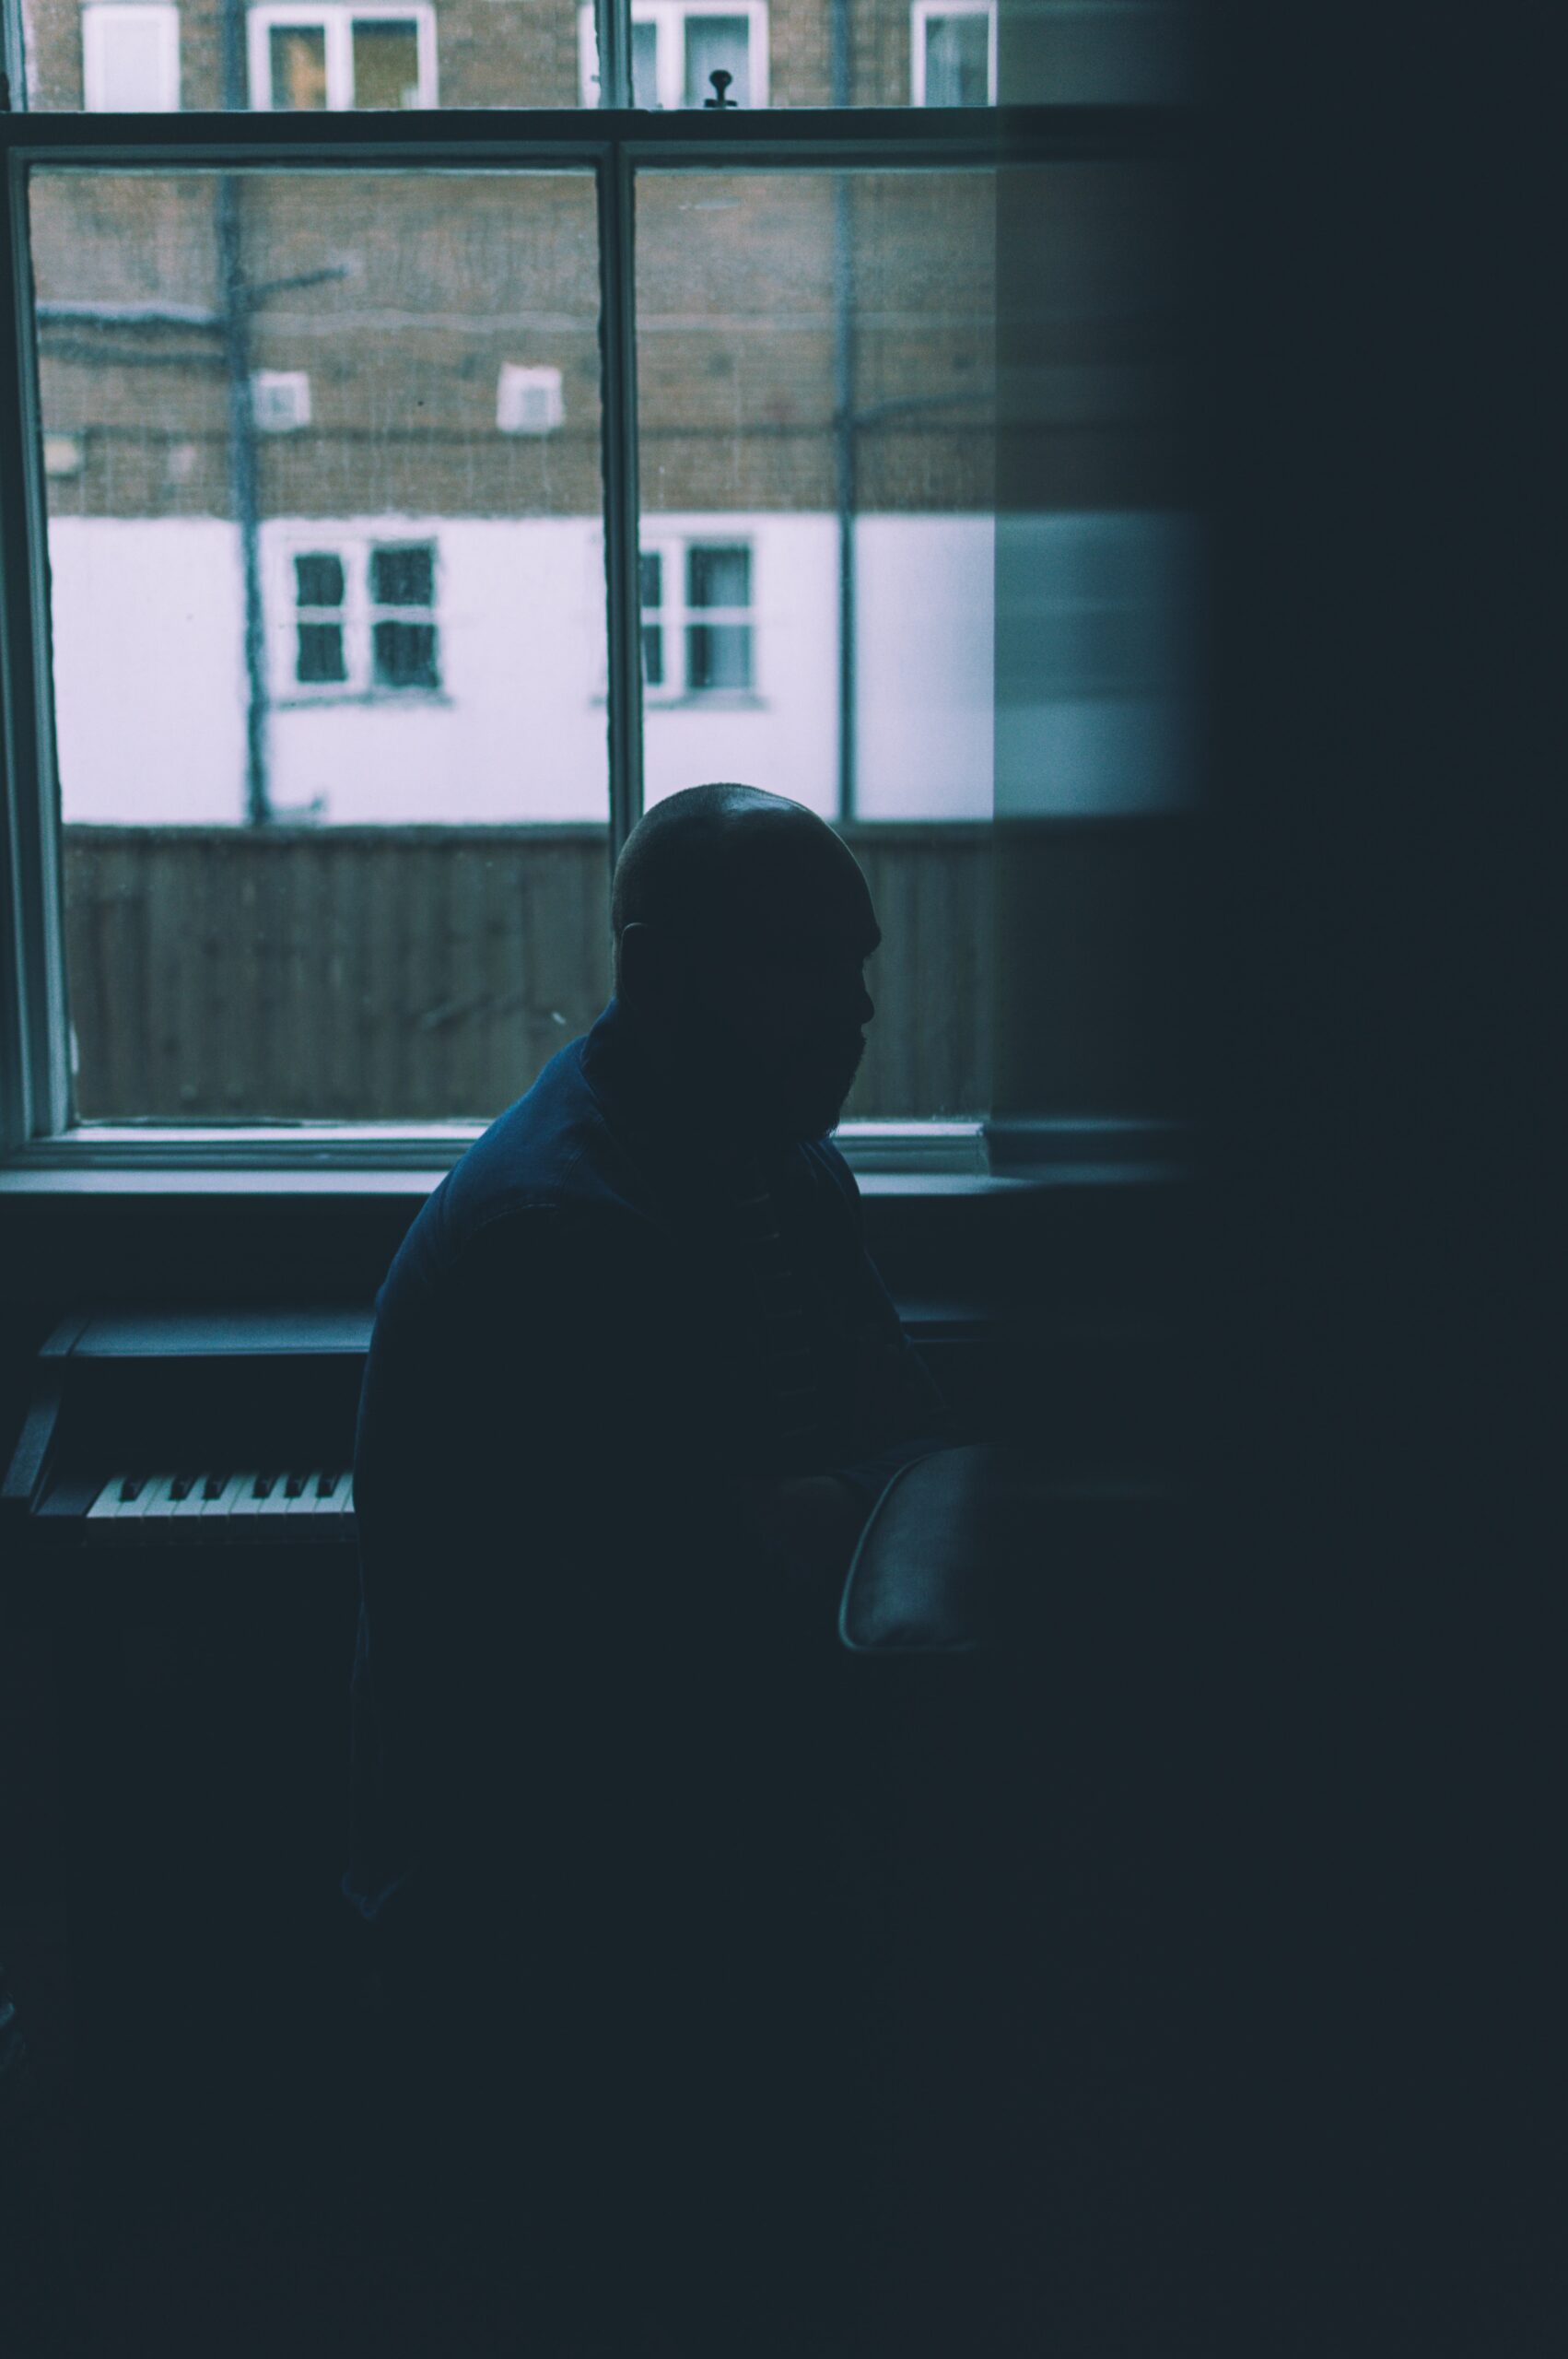 man sitting near piano inside room by elliot man on Unsplash